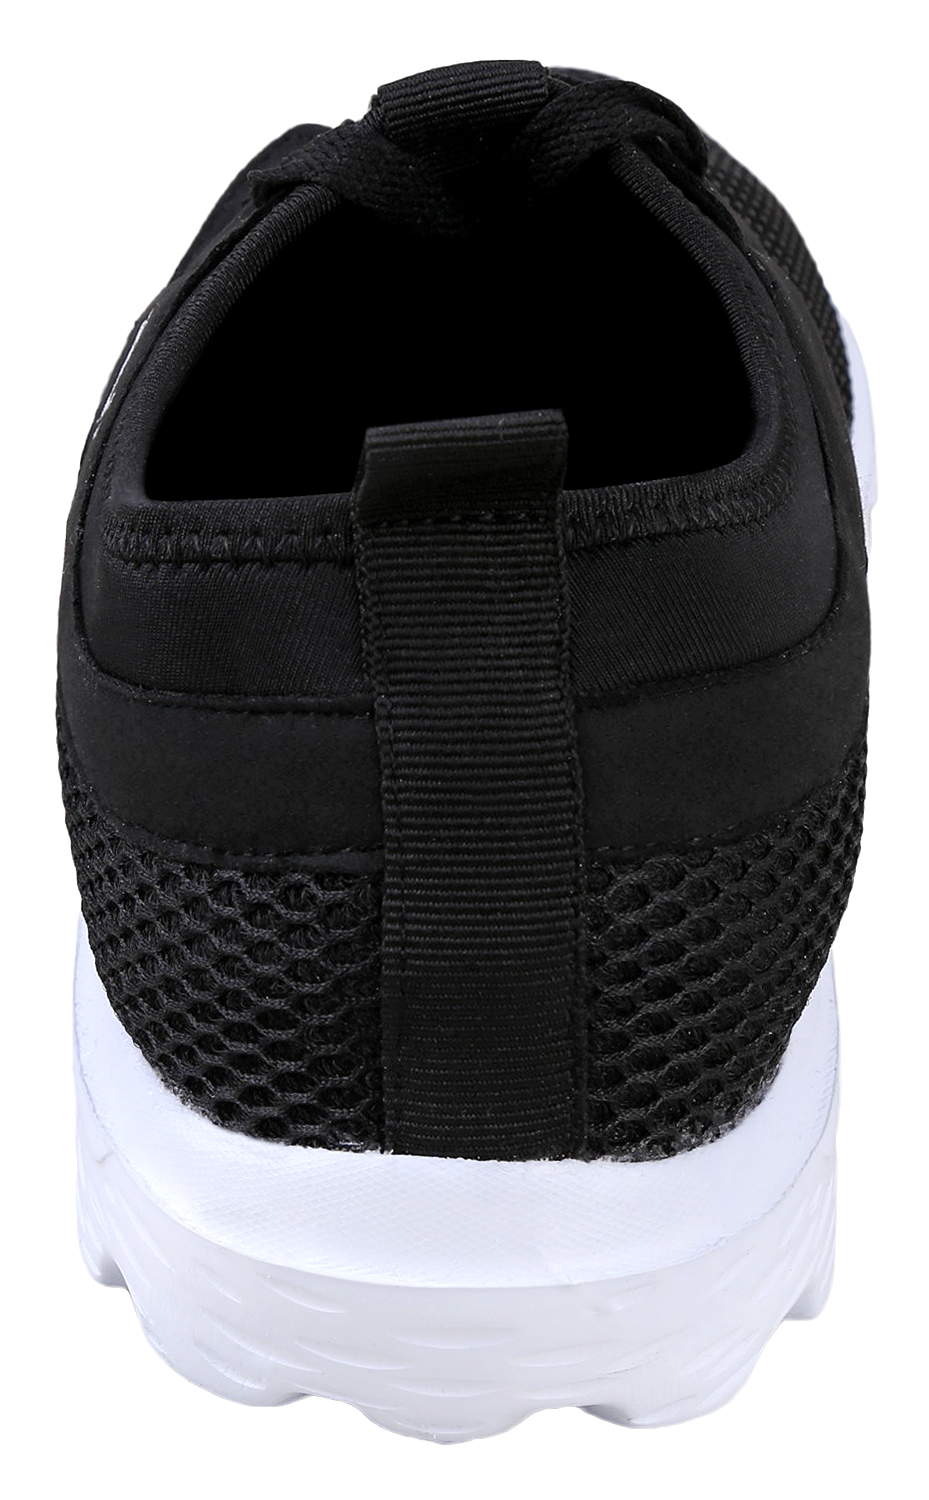 Urban Fox Men's Breeze Lightweight Shoes | Lightweight Shoes for Men | Casual Shoes | Walking Shoes for Men | Black/White 11 M US - image 4 of 7